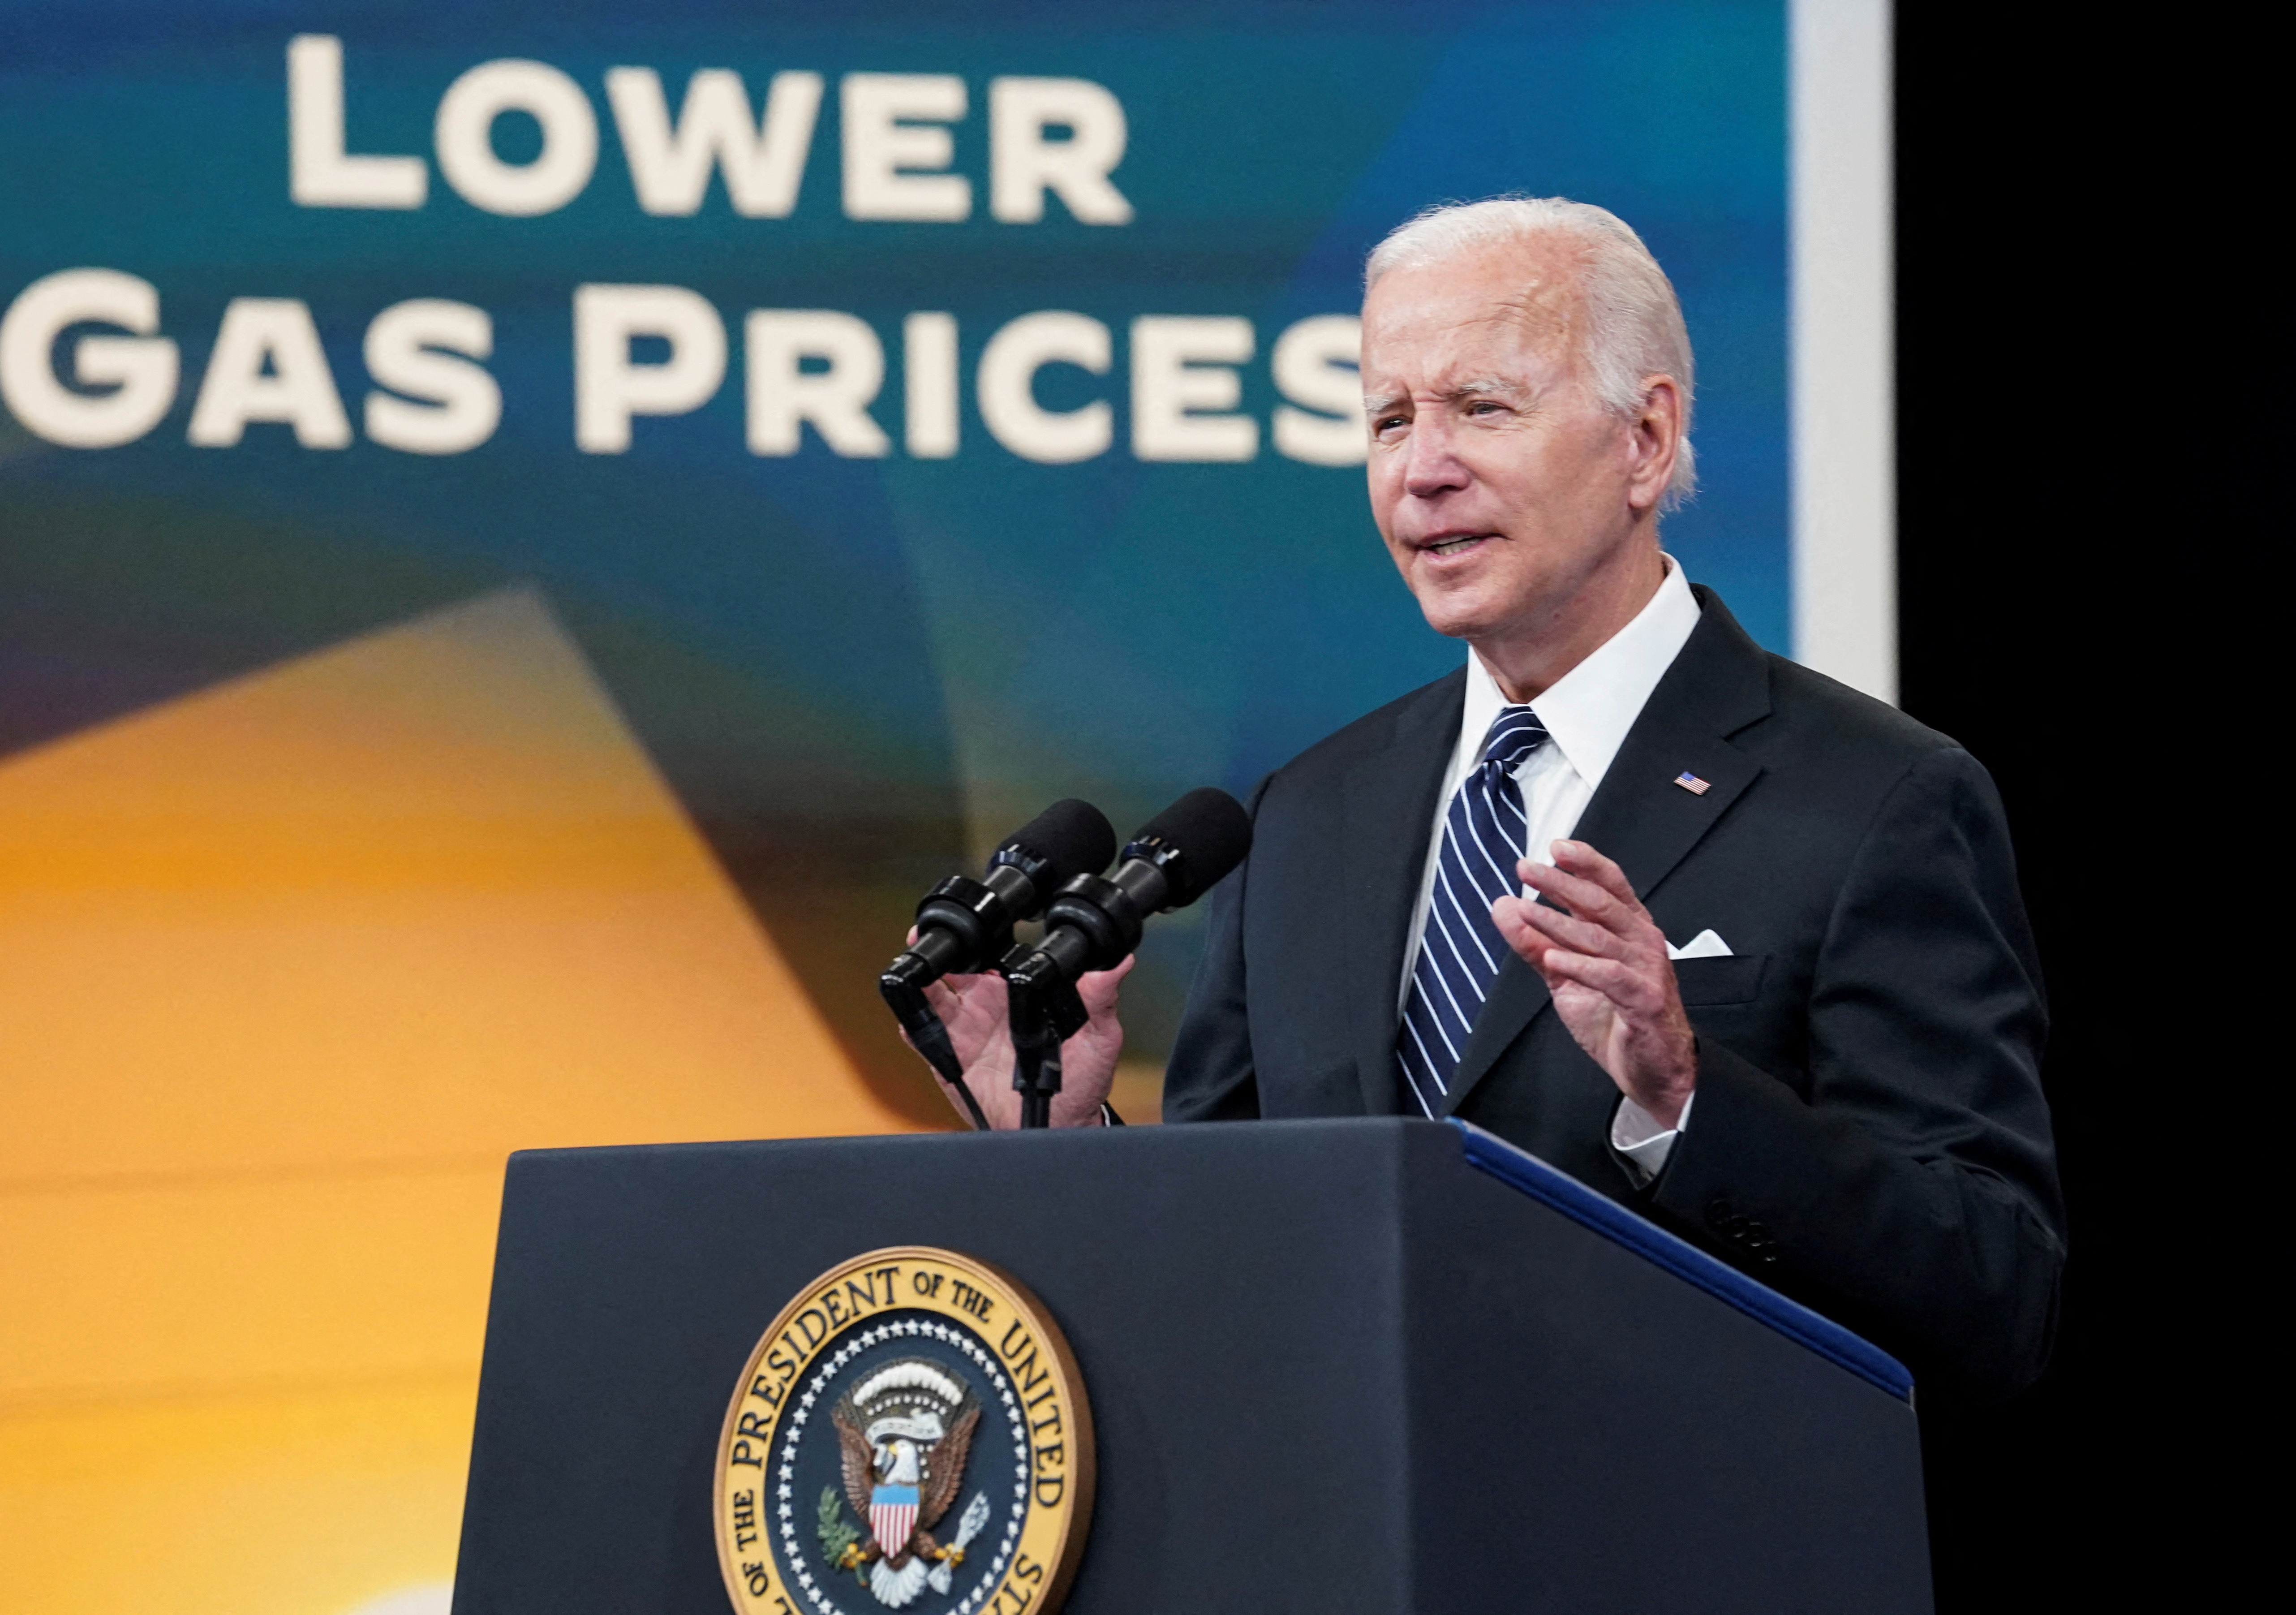 US President Joe Biden speaks about gas prices at the White House in Washington